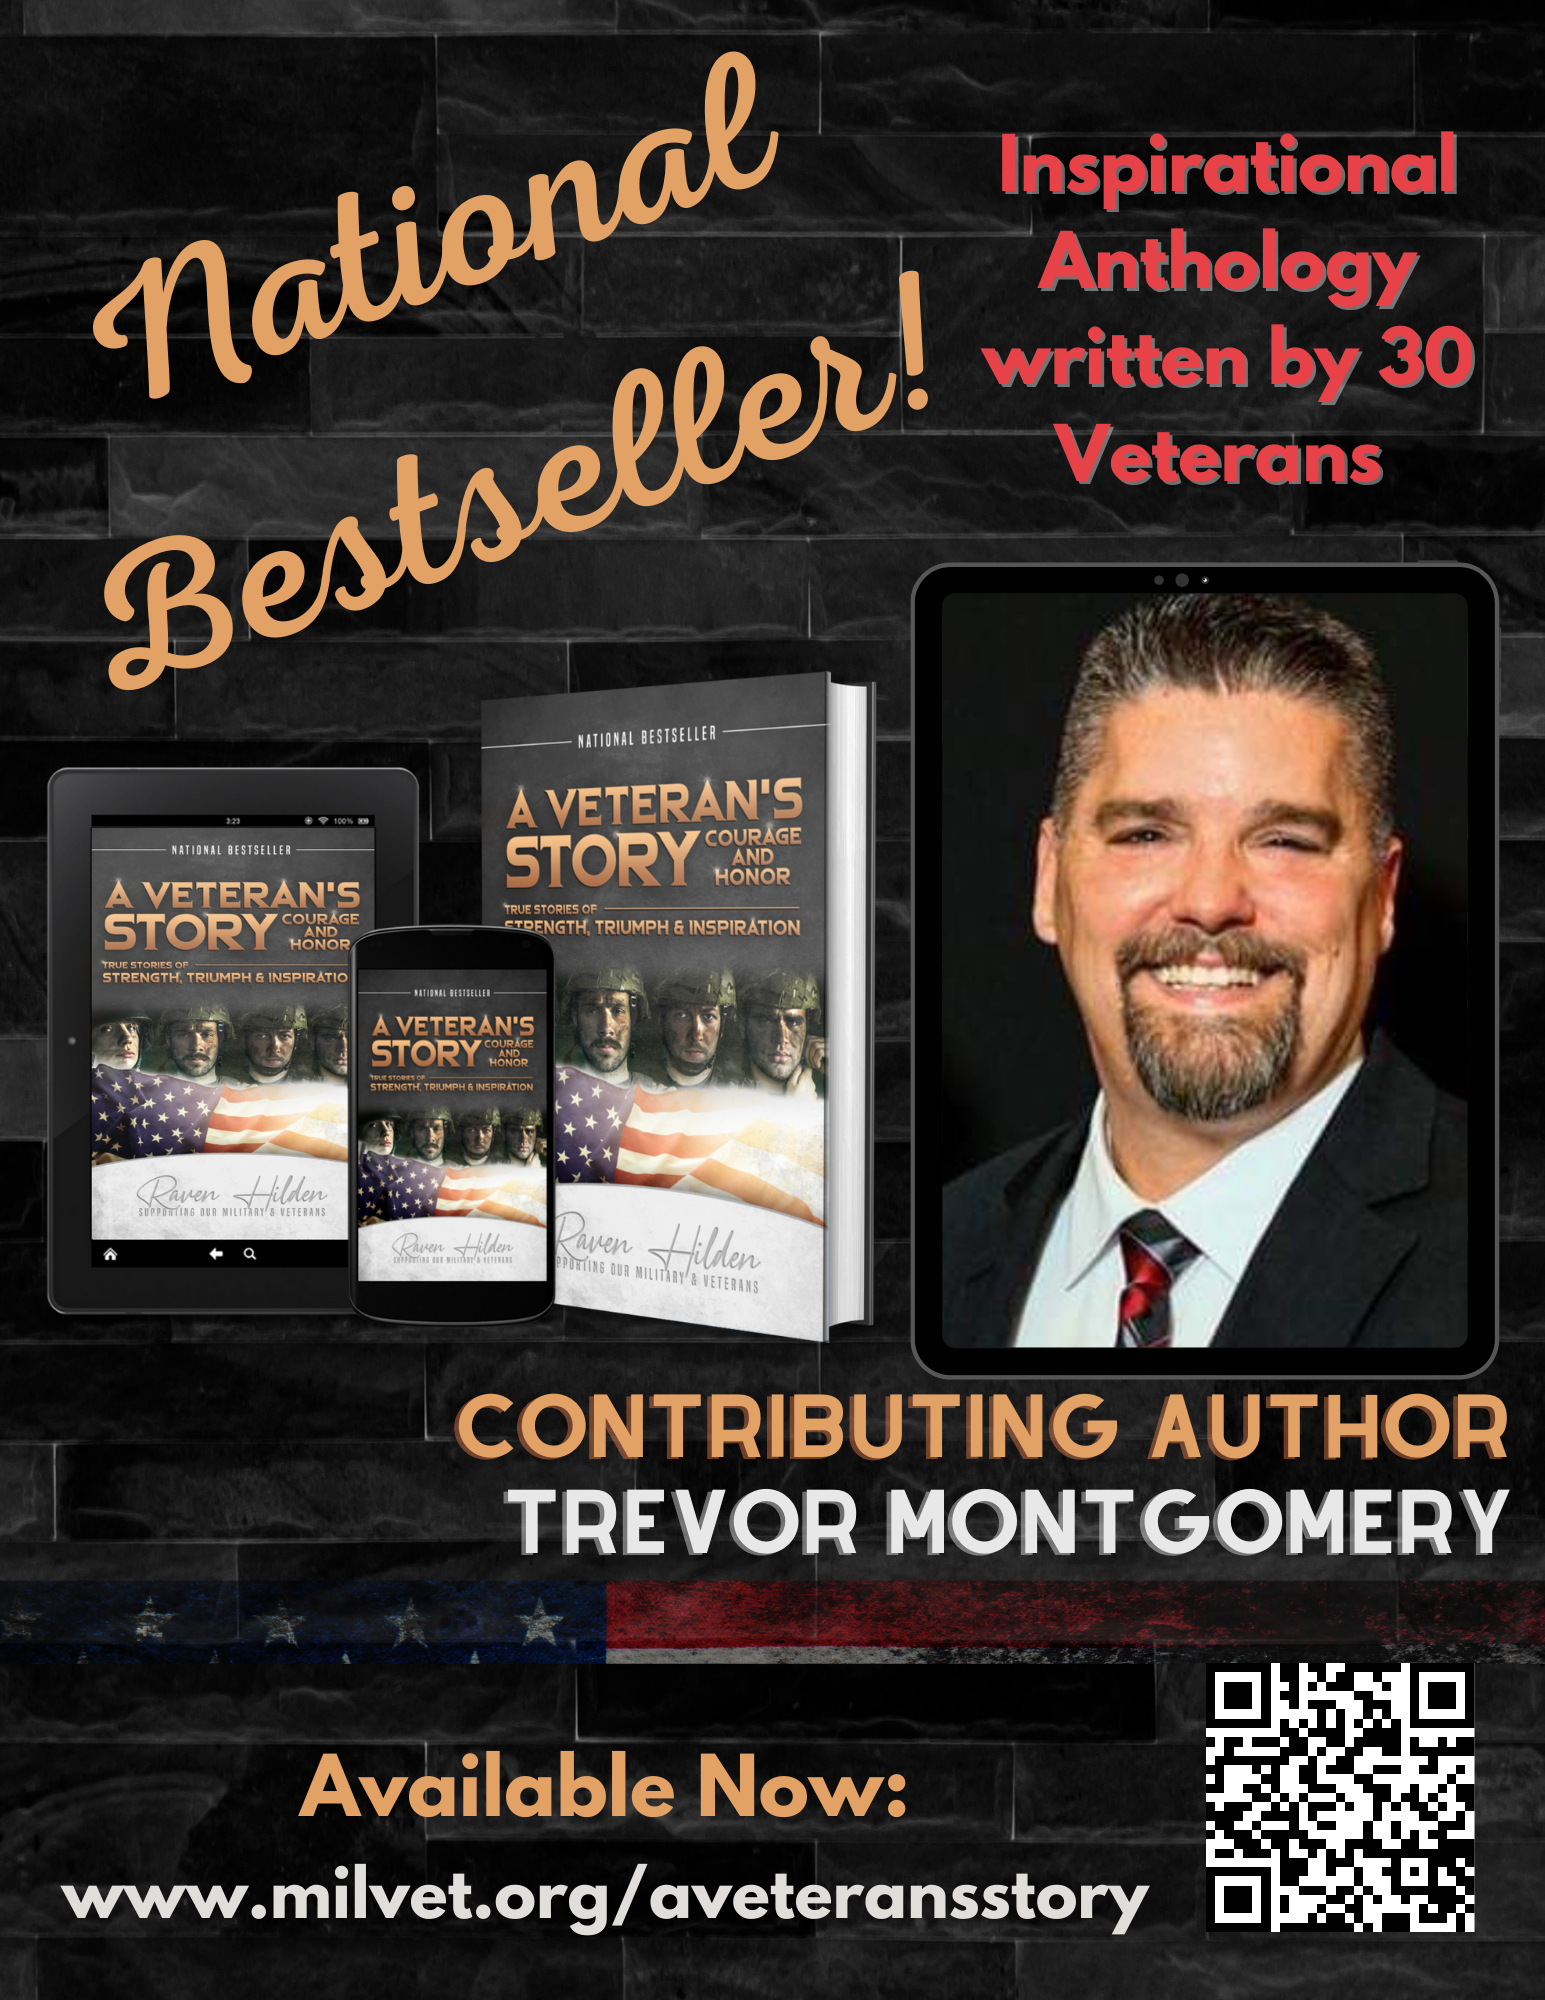 Bestseller Author Trevor Montgomery.png